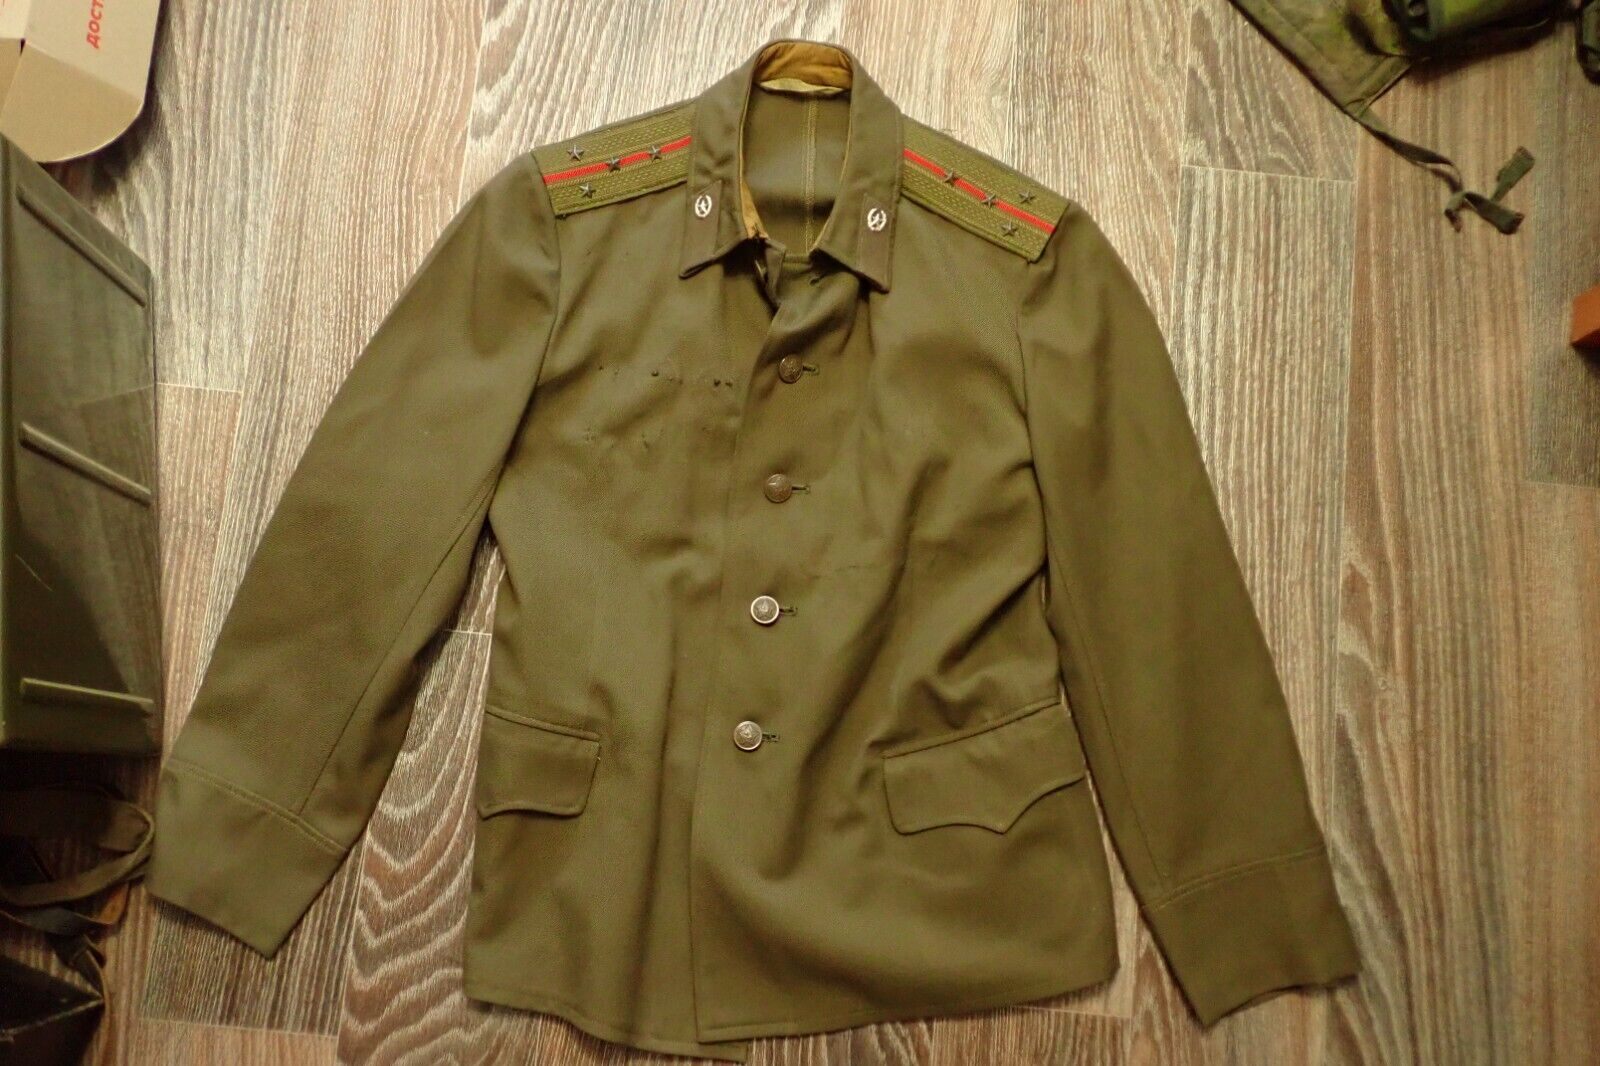 Soviet Army Uniform jacket